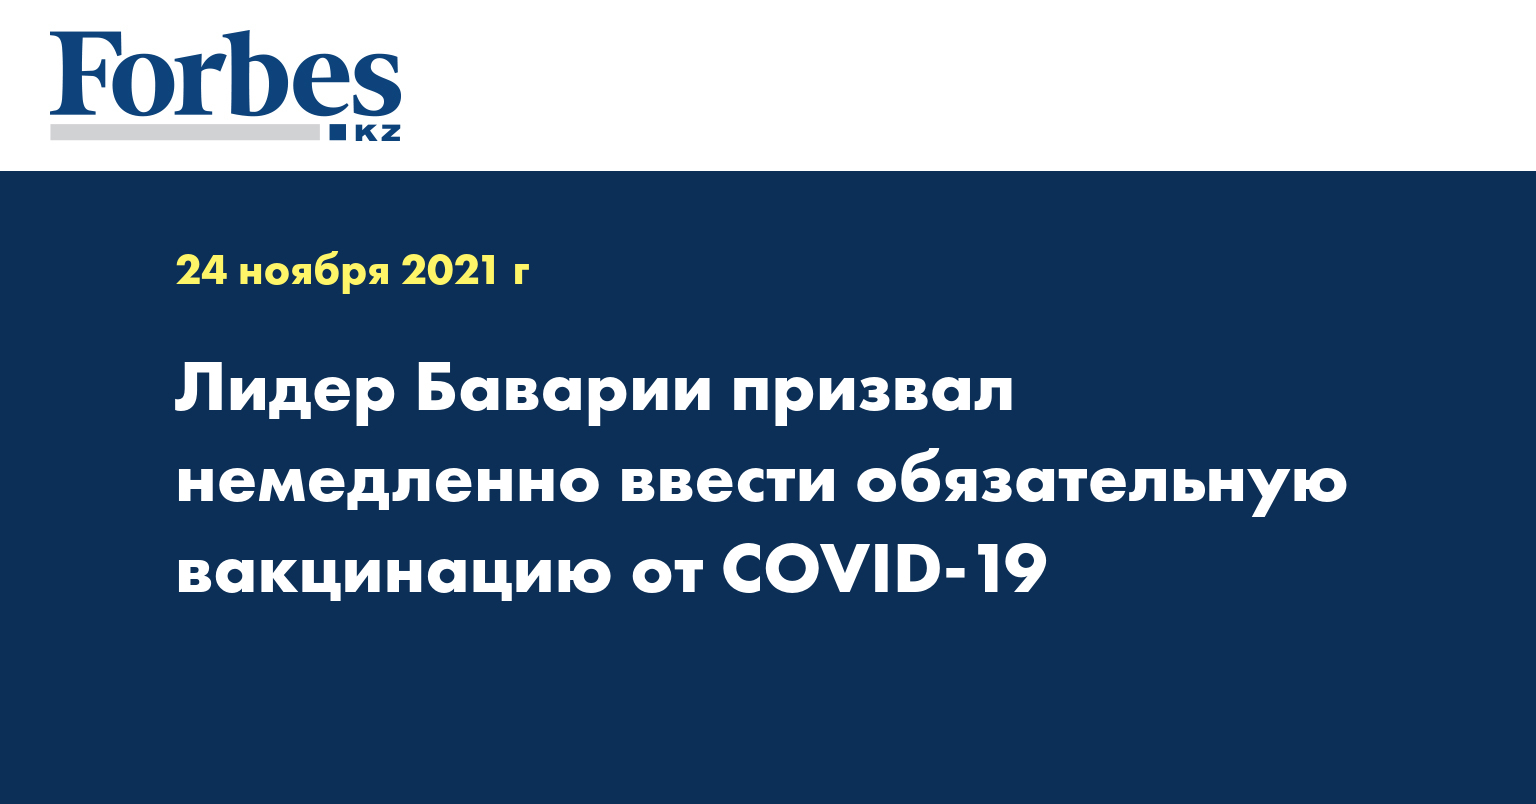 Лидер Баварии призвал немедленно ввести обязательную вакцинацию от COVID-19